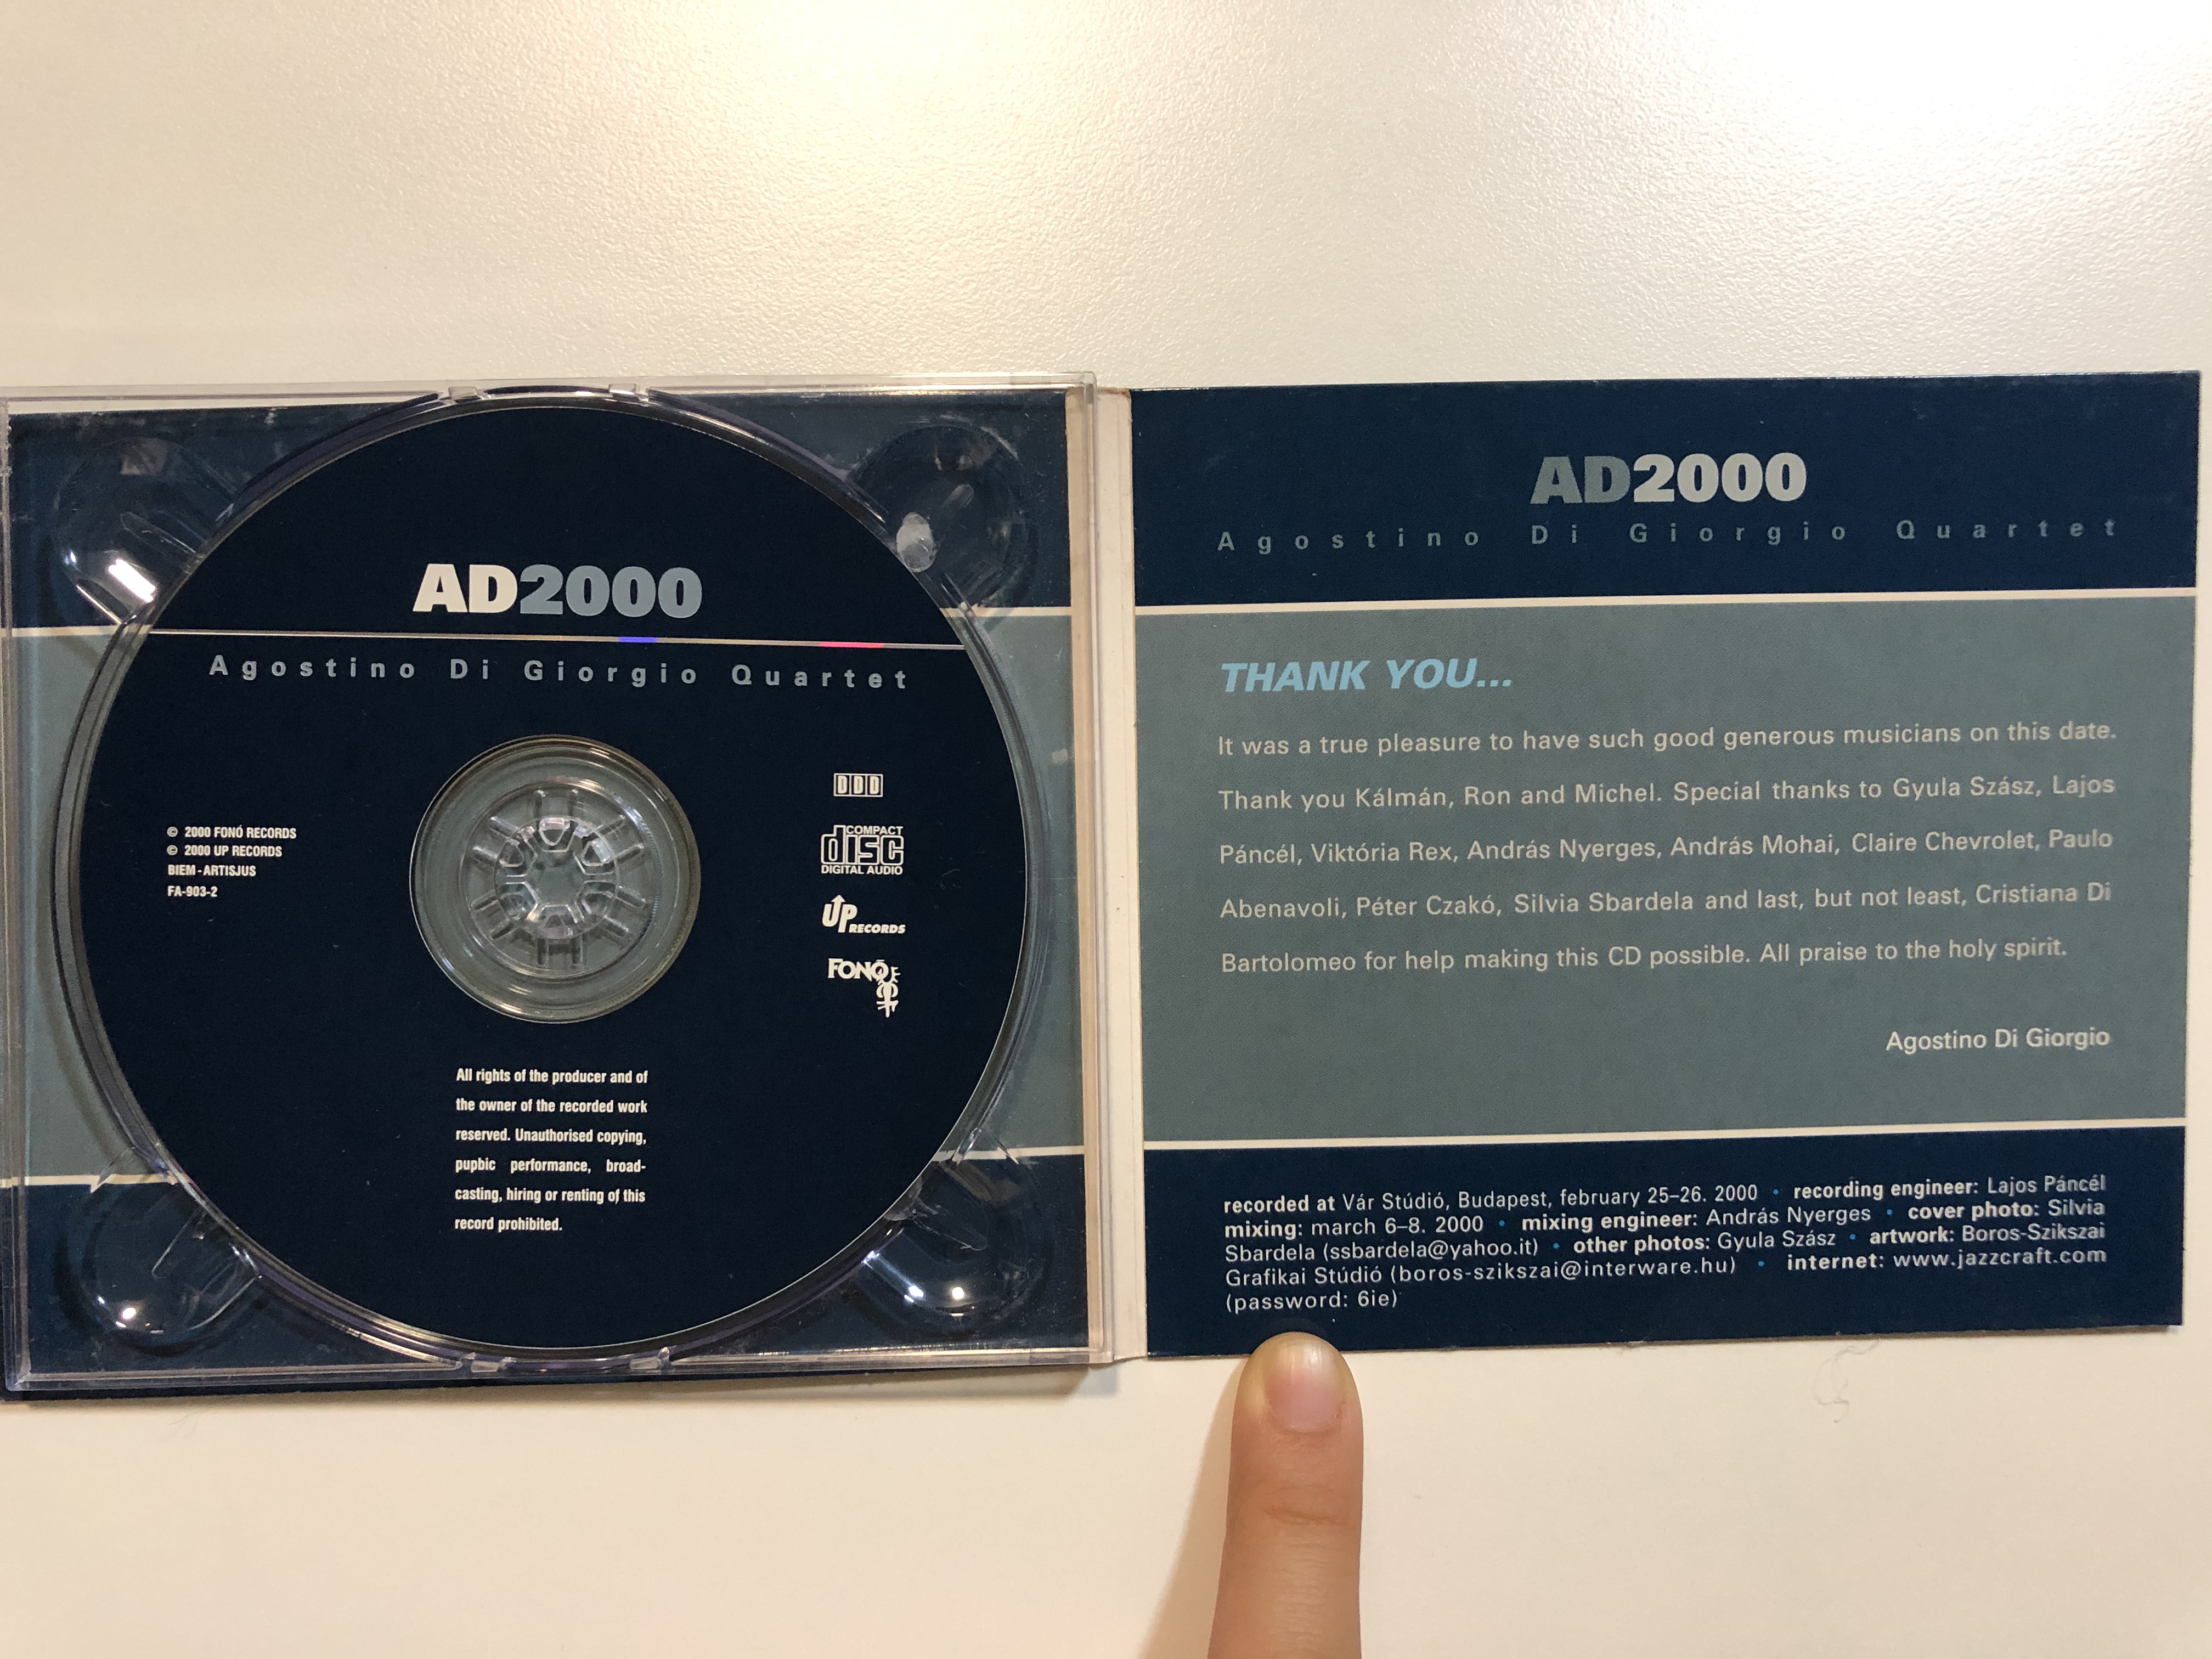 ad2000-agostino-di-giorgio-quartet-featuring-k-lm-n-ol-h-ron-seguin-and-michael-lambert-fon-records-audio-cd-2000-fa-903-2-6-.jpg